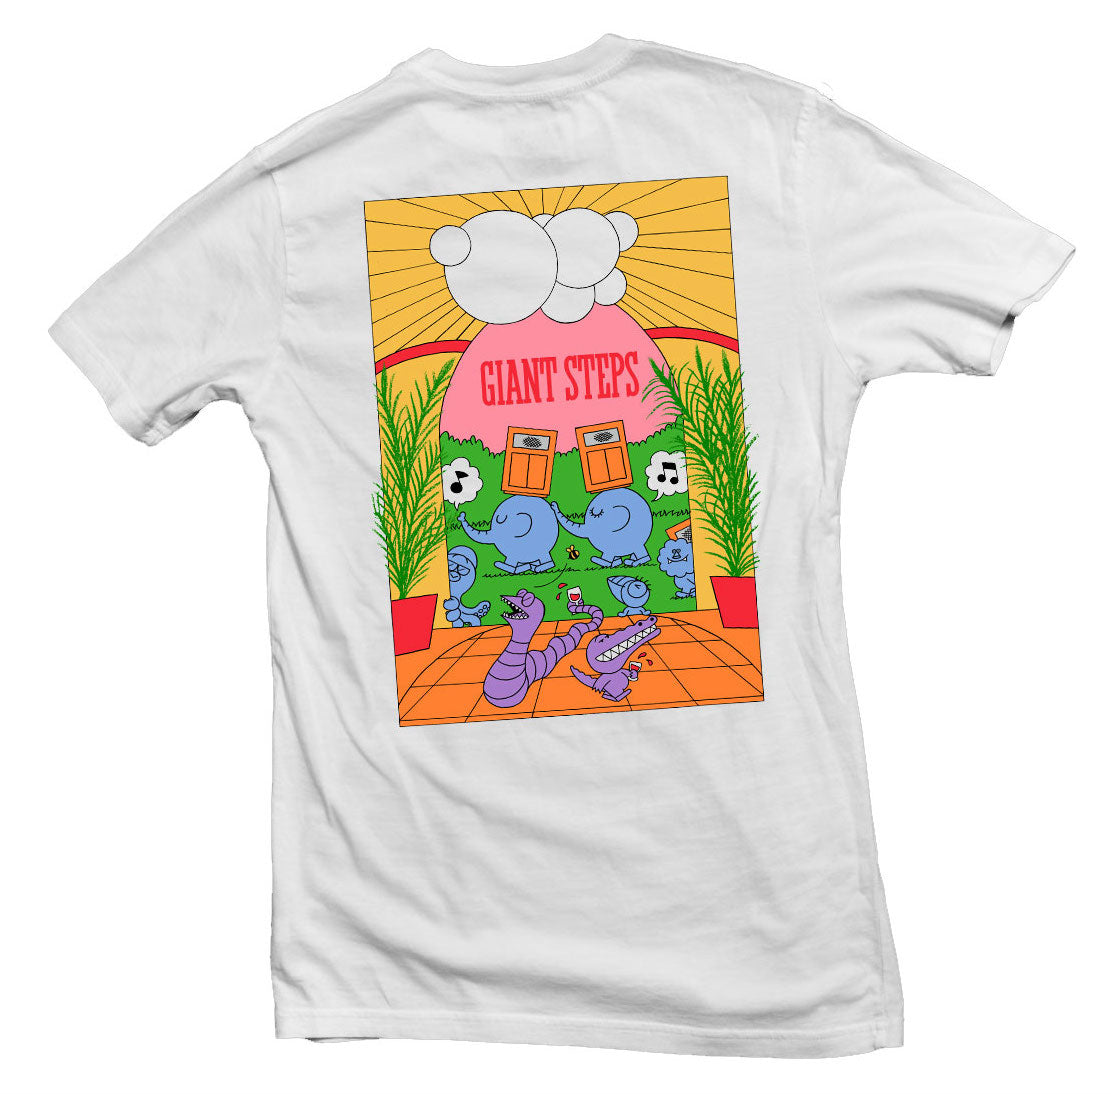 GIANT STEPS x Festival T-shirt Full Colour Edition